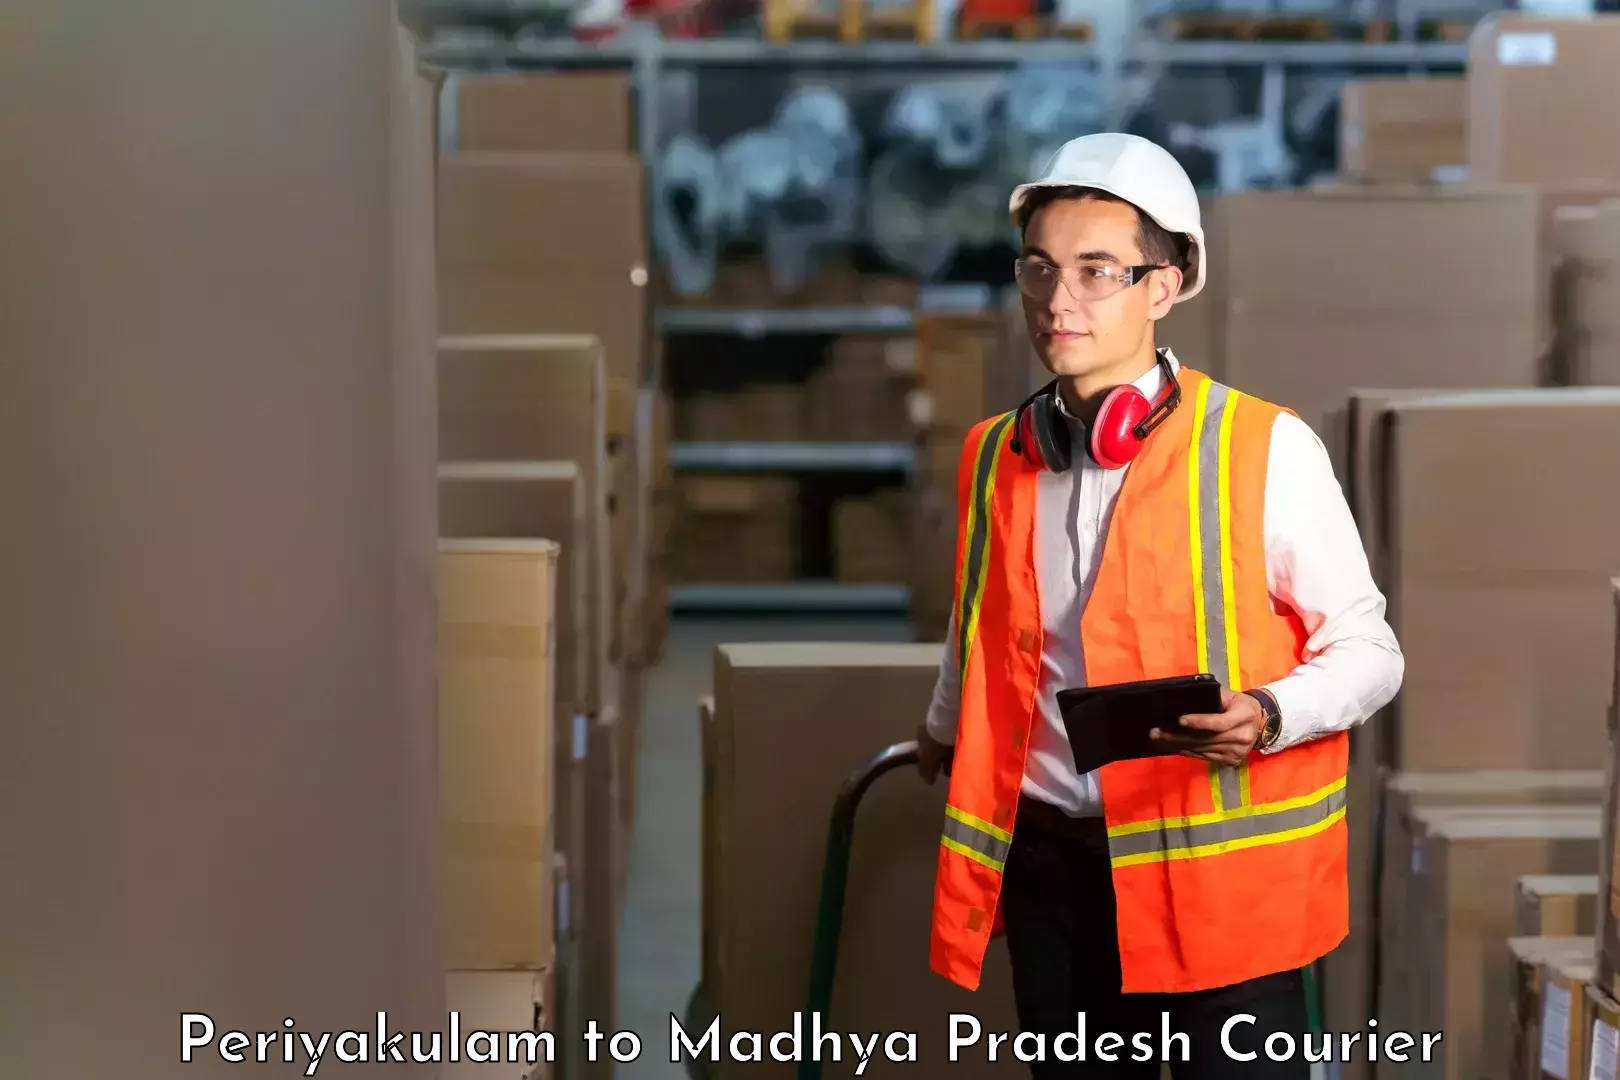 Bulk courier orders Periyakulam to Madhya Pradesh